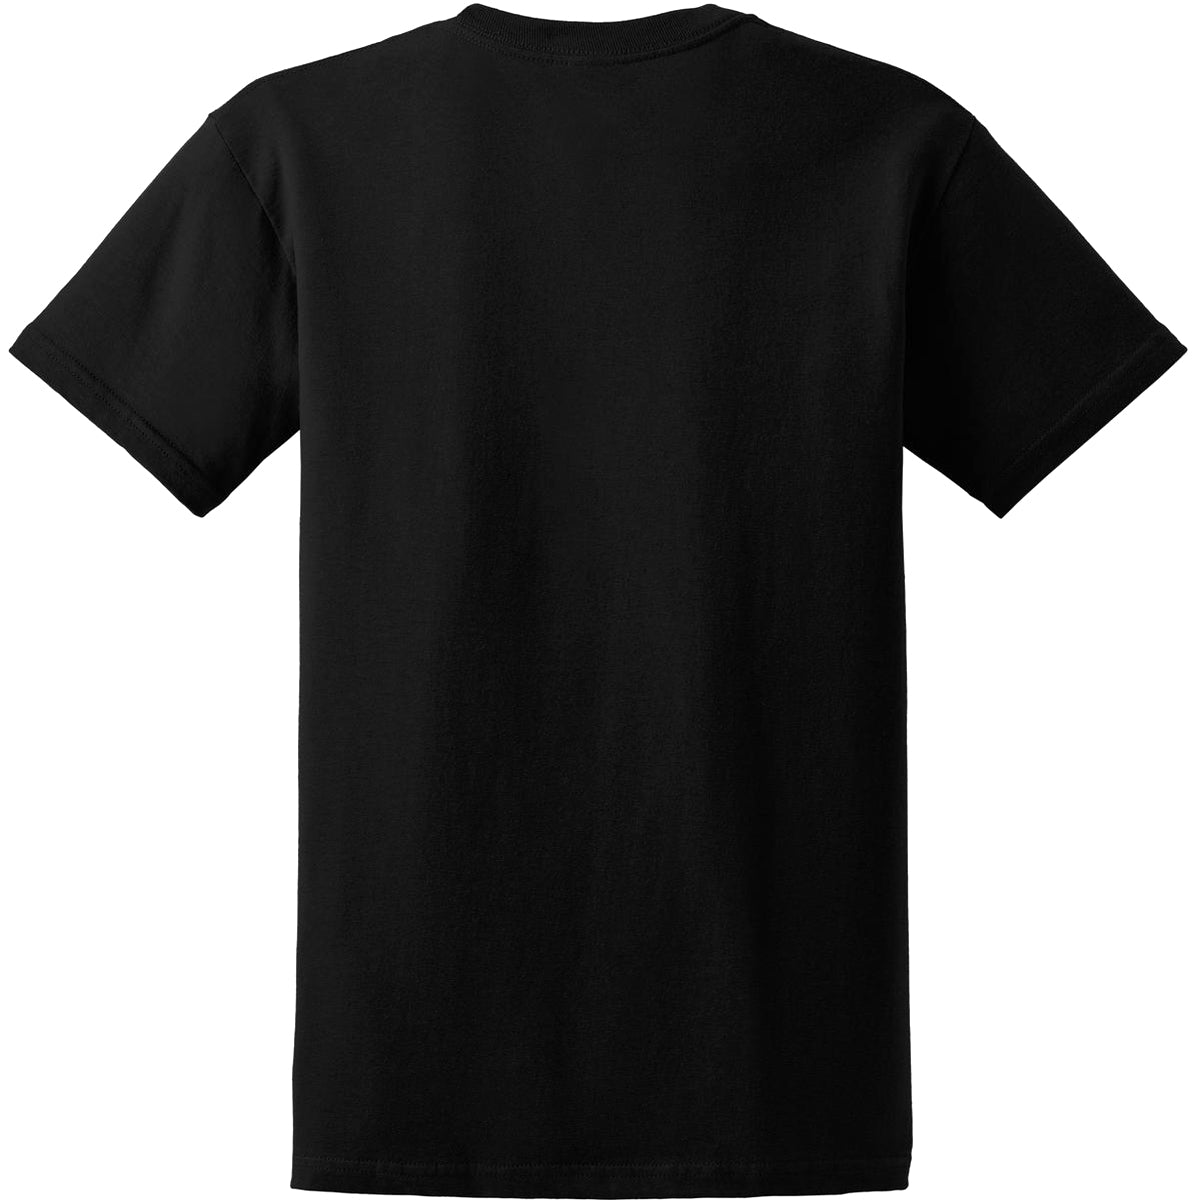 Cedar Valley Soccer Club Ultra Cotton 100% Cotton T-Shirt Sweatshirt Gildan 